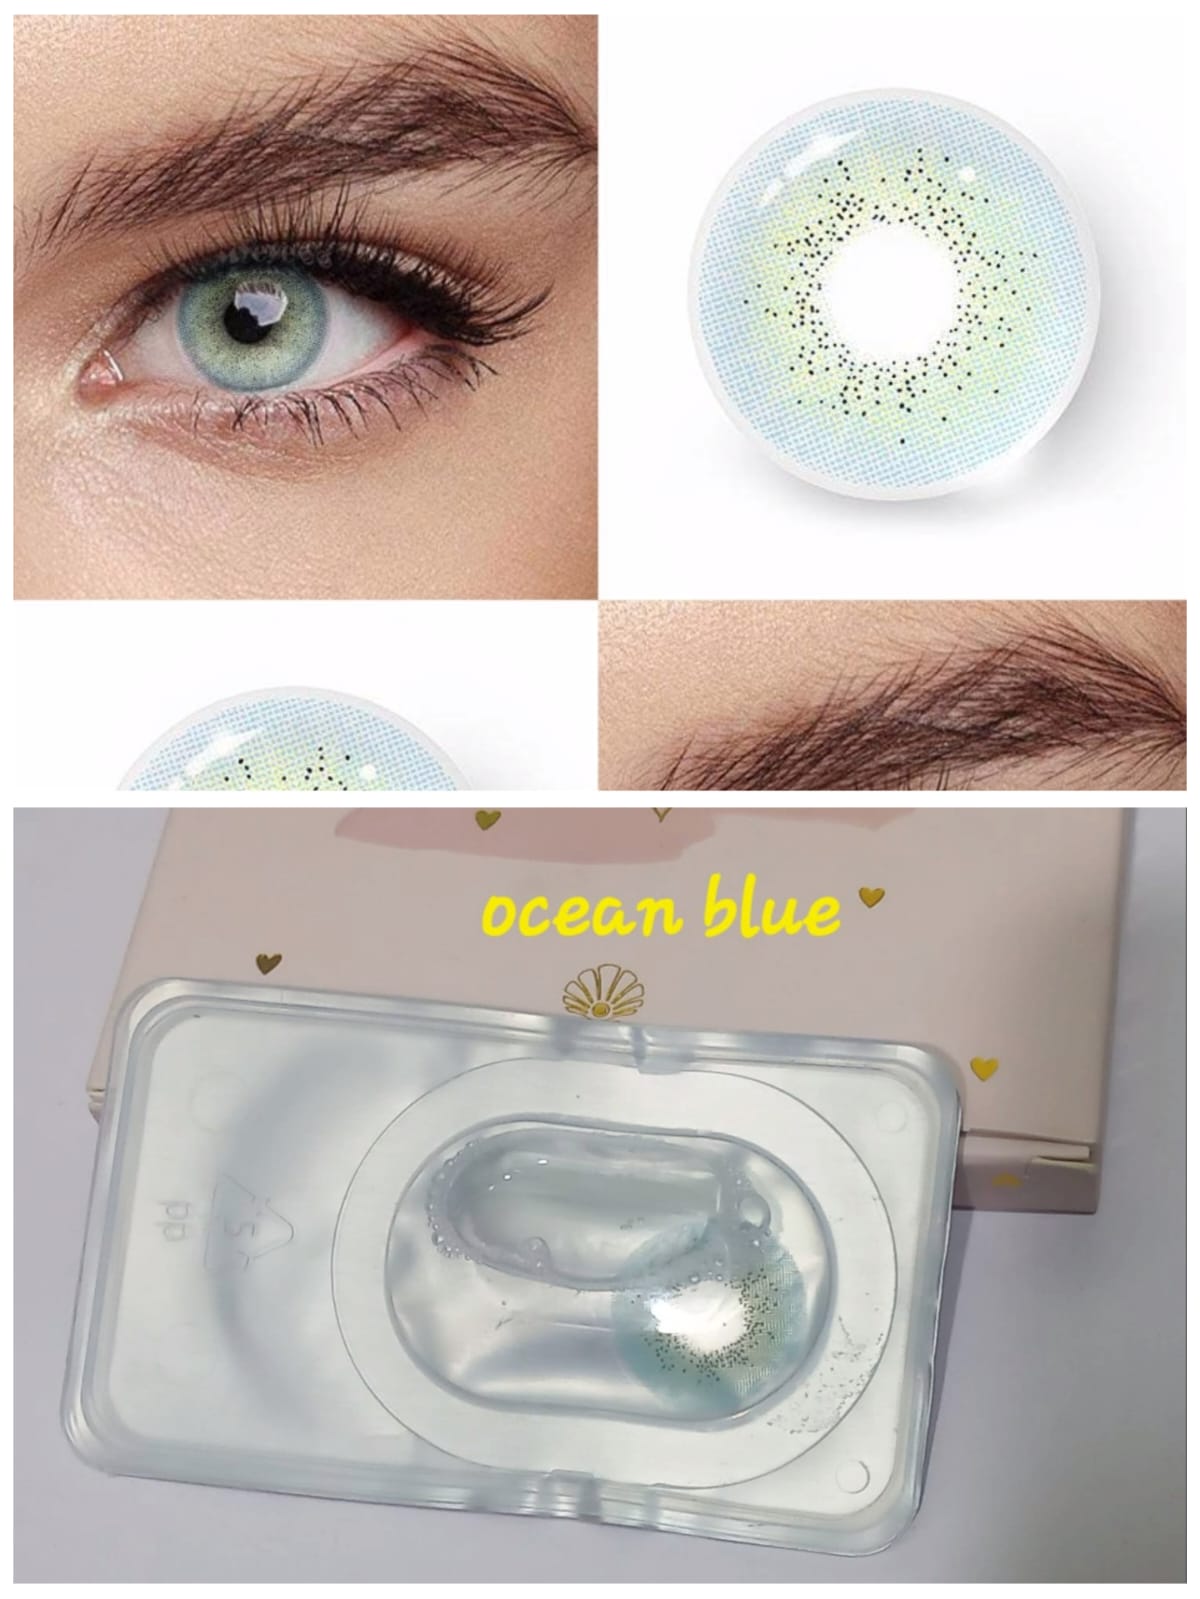 Oceanic Blue Cosmetic Lens